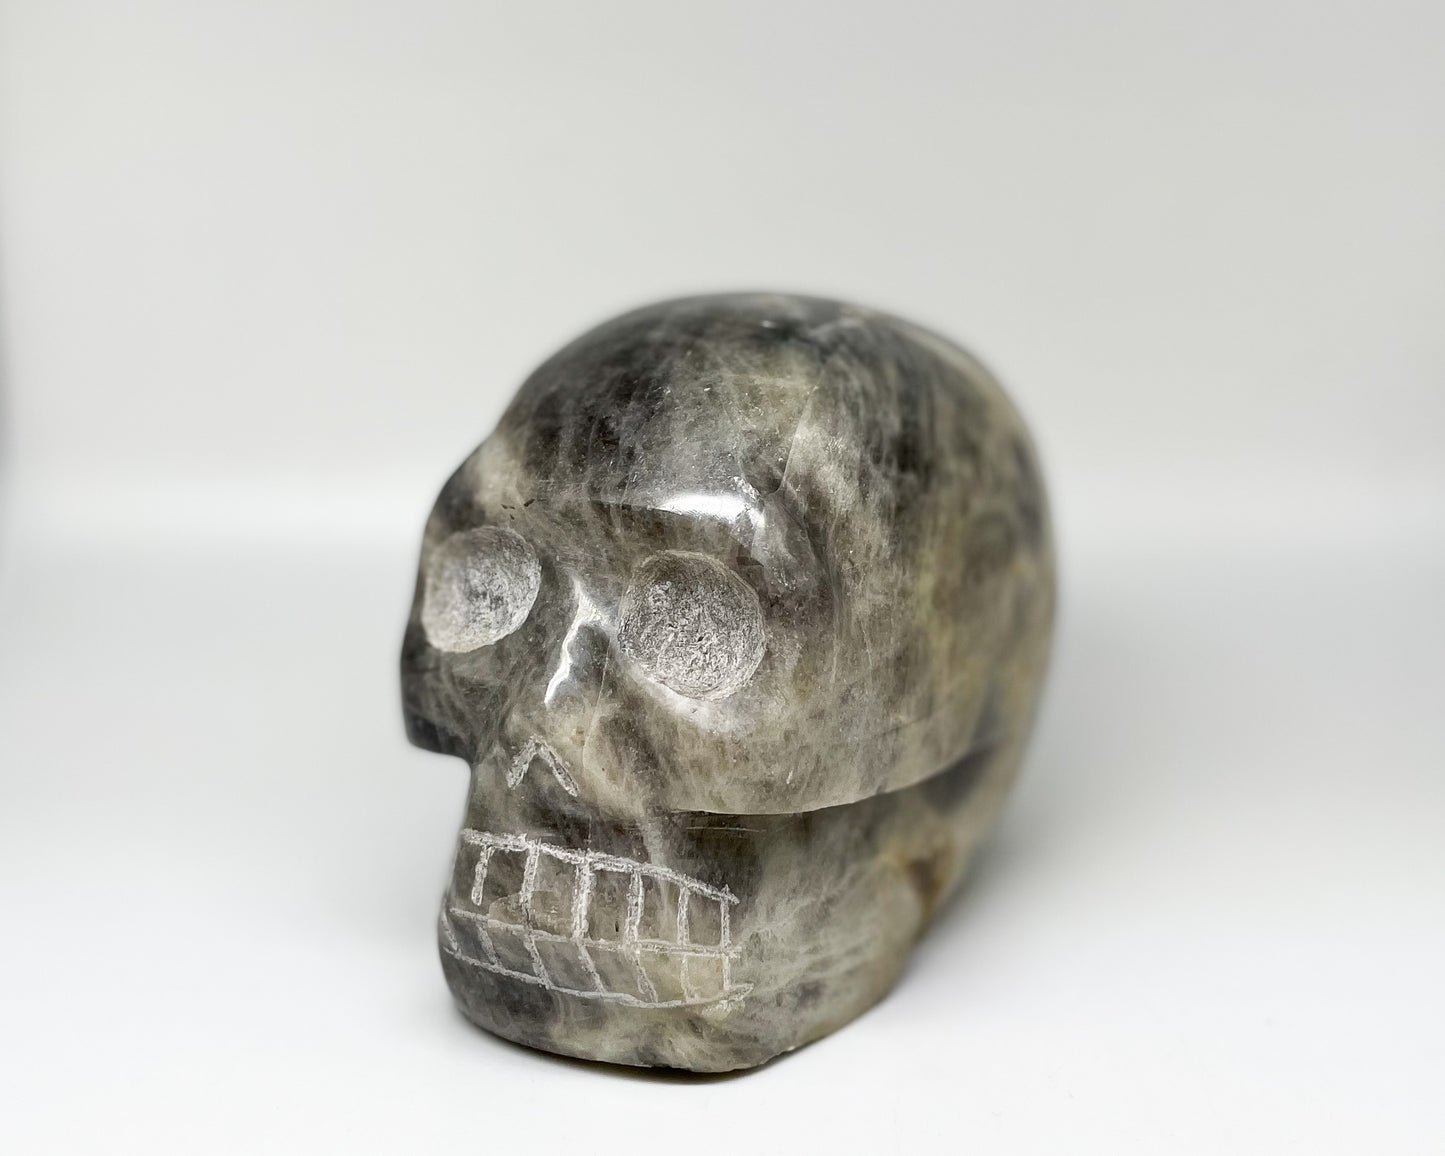 4.25 x 5.5 Inch Black Moonstone Crystal Skull Home Décor